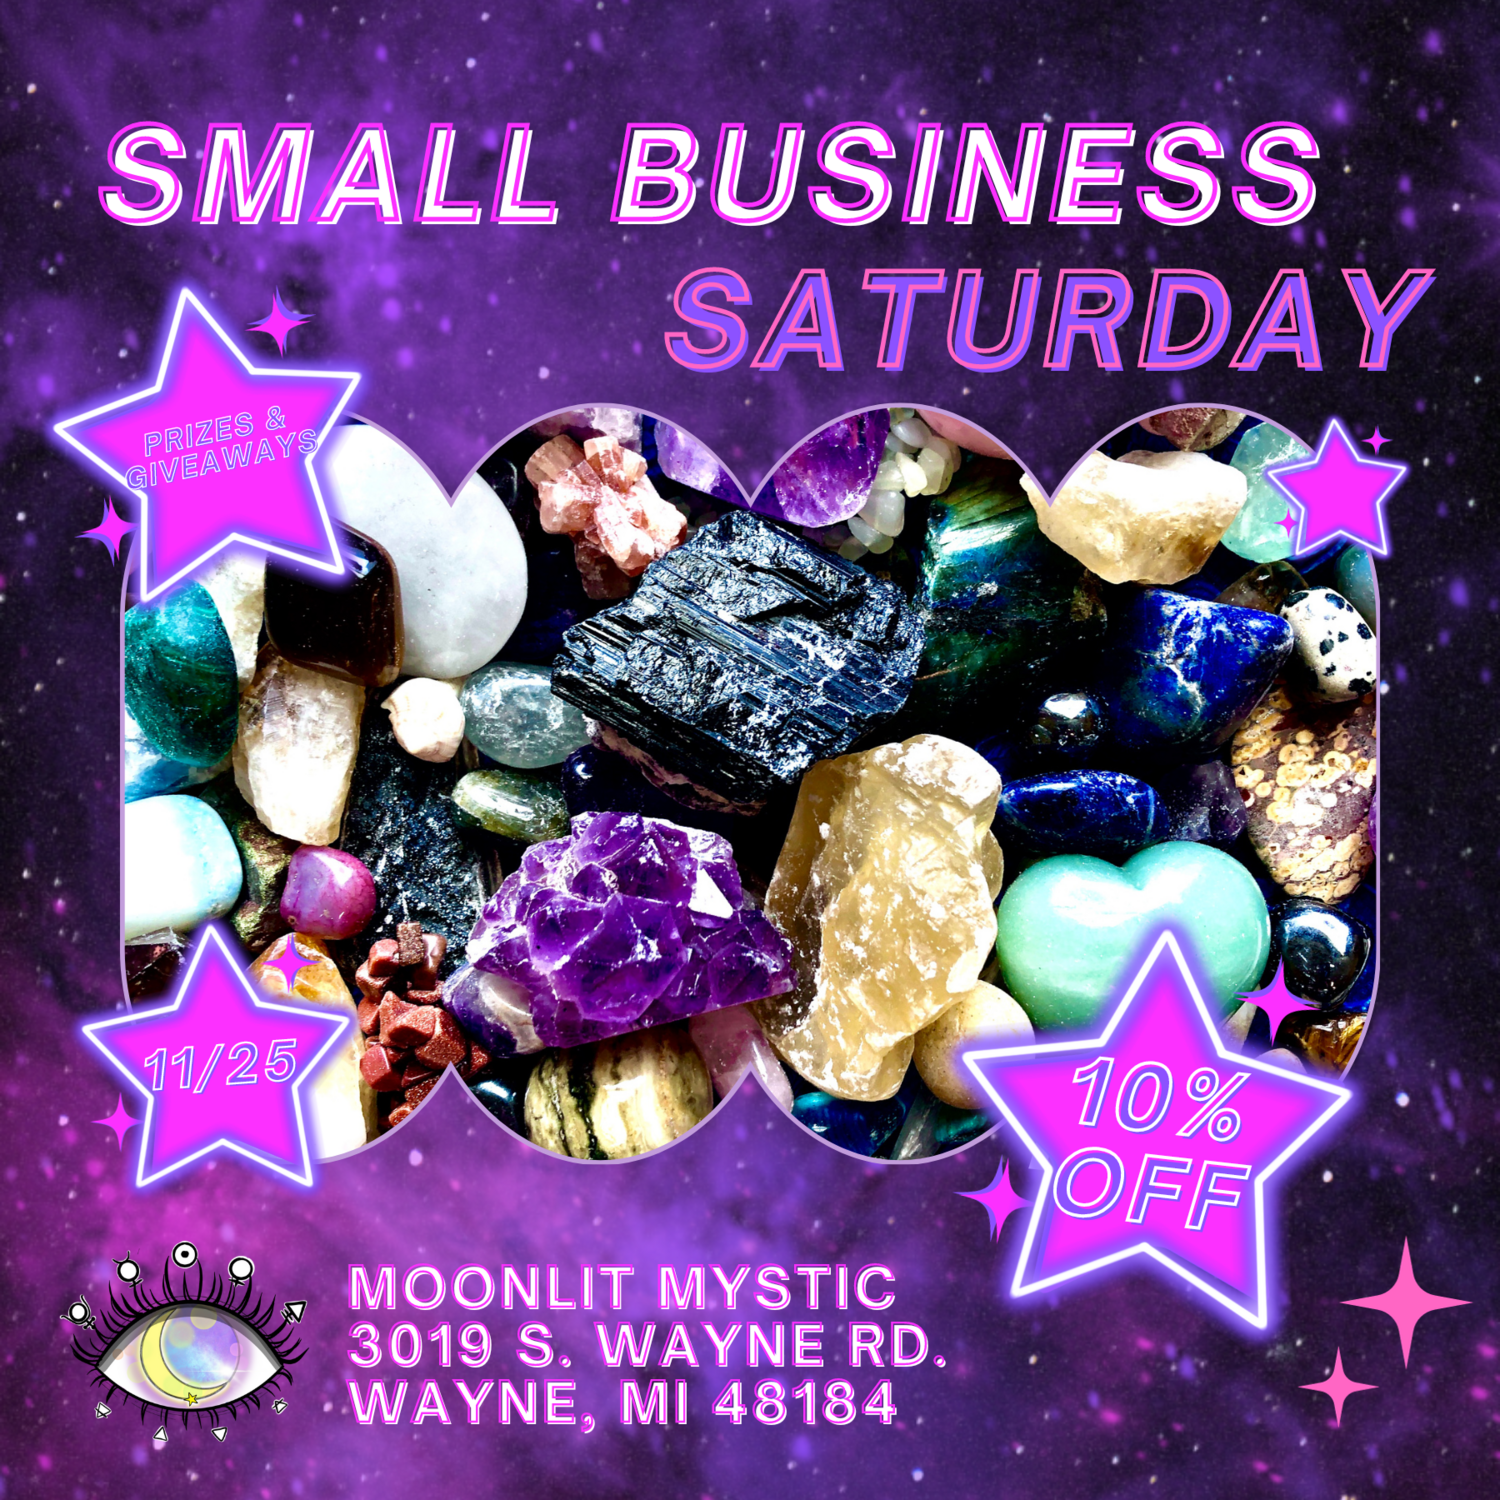 Small Business Saturday - Saturday, November 25th